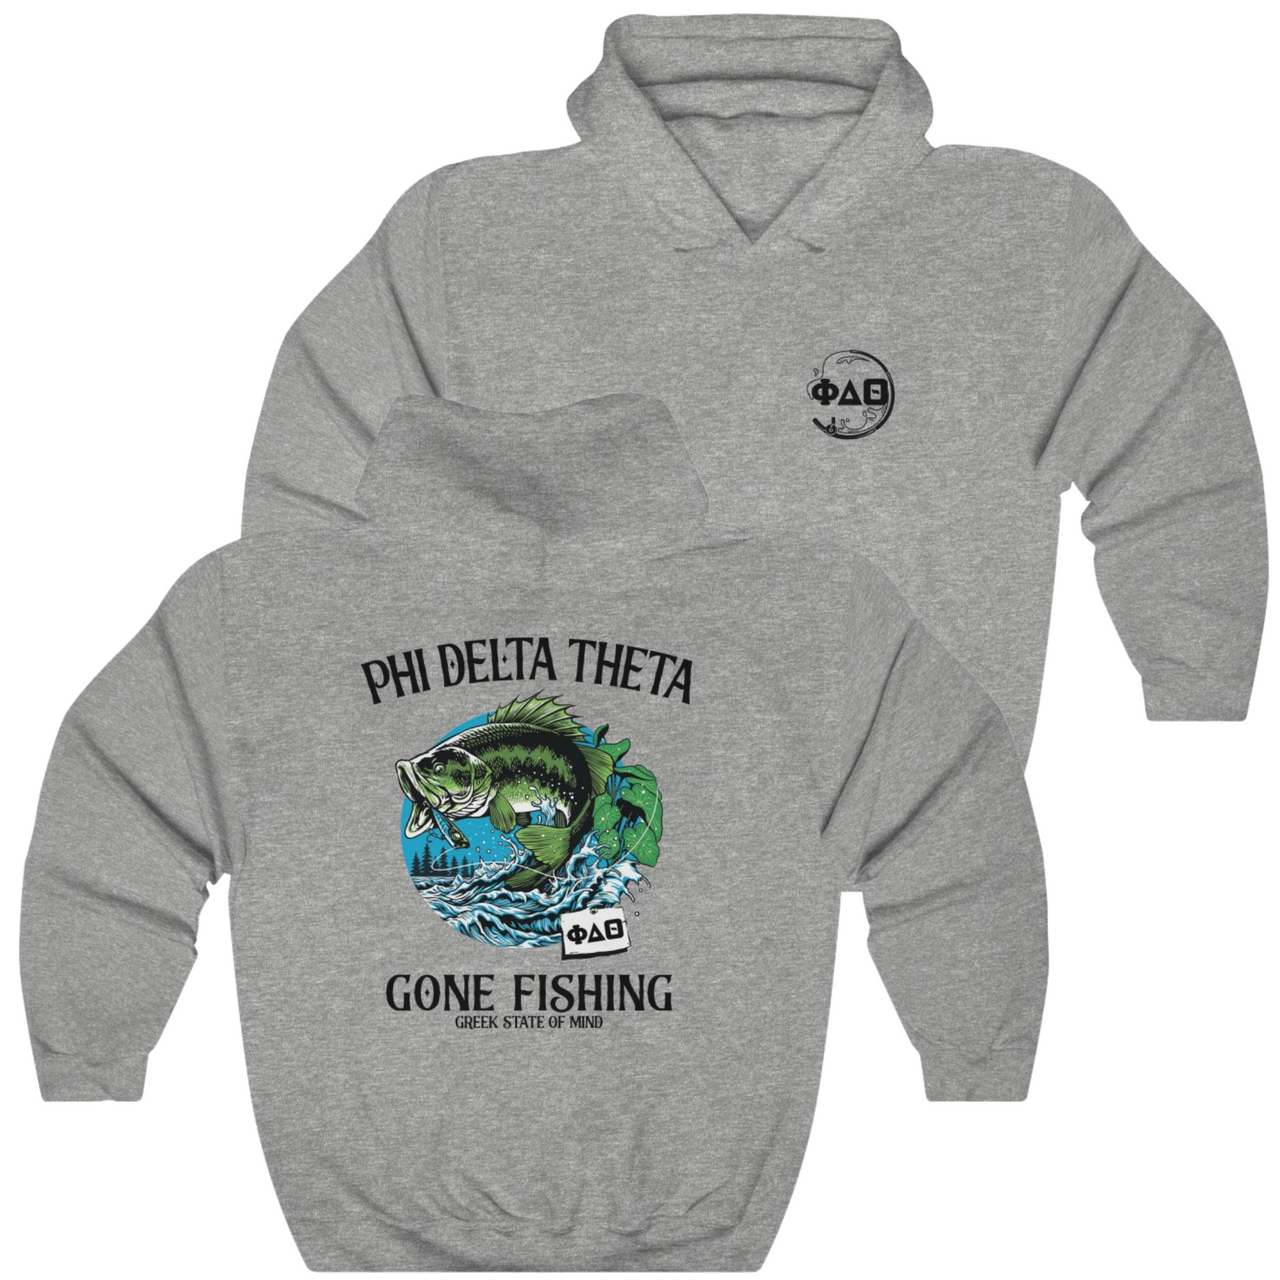 grey Phi Delta Theta Graphic Hoodie | Gone Fishing | phi delta theta fraternity greek apparel